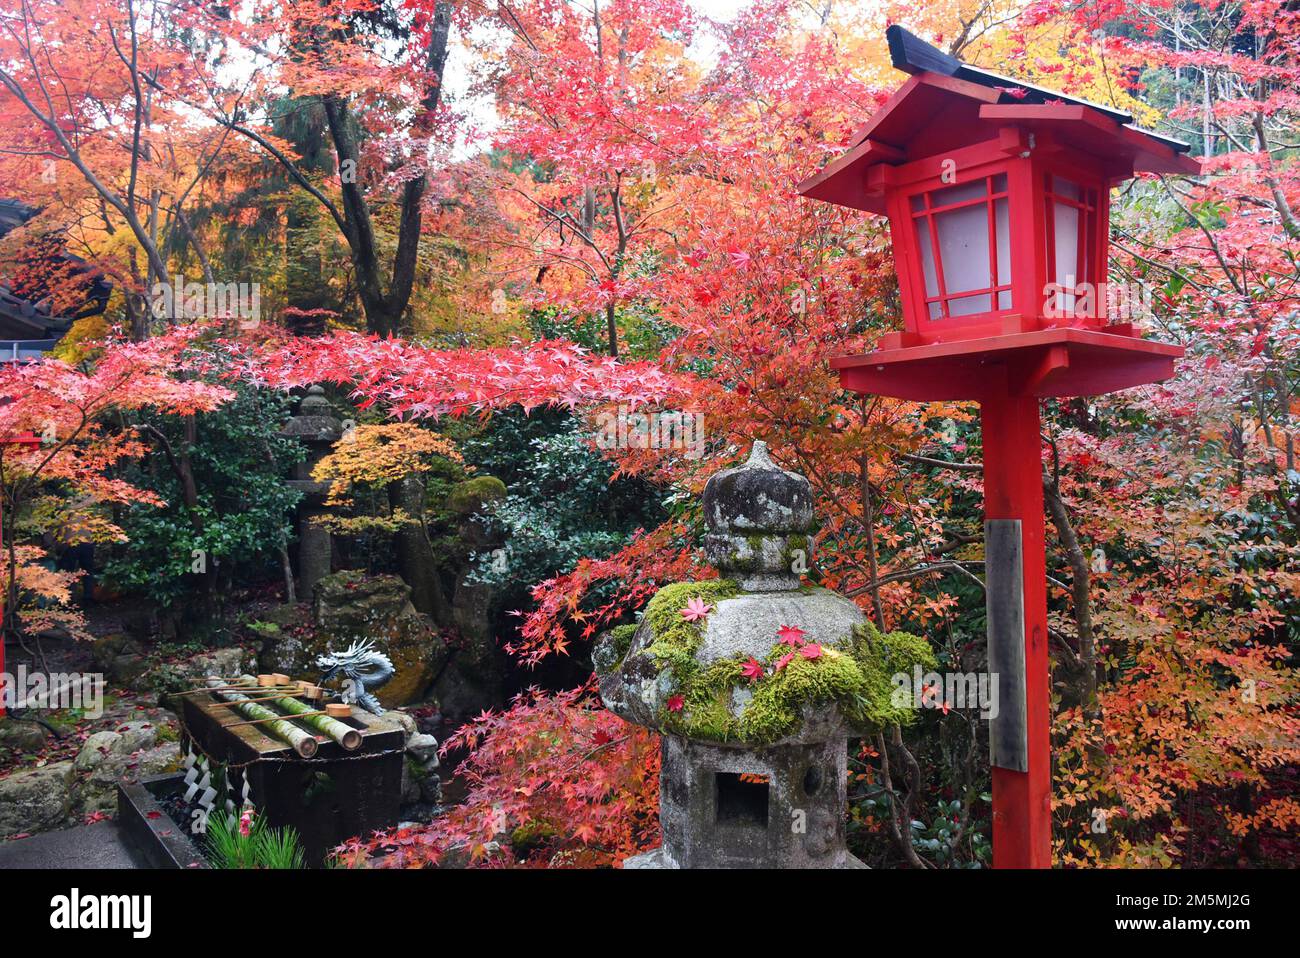 Autumn foliage in Japan - colorful japanese maple leaves during momiji season around Kuwayama shrine in Kyoto, red wooden lantern Stock Photo